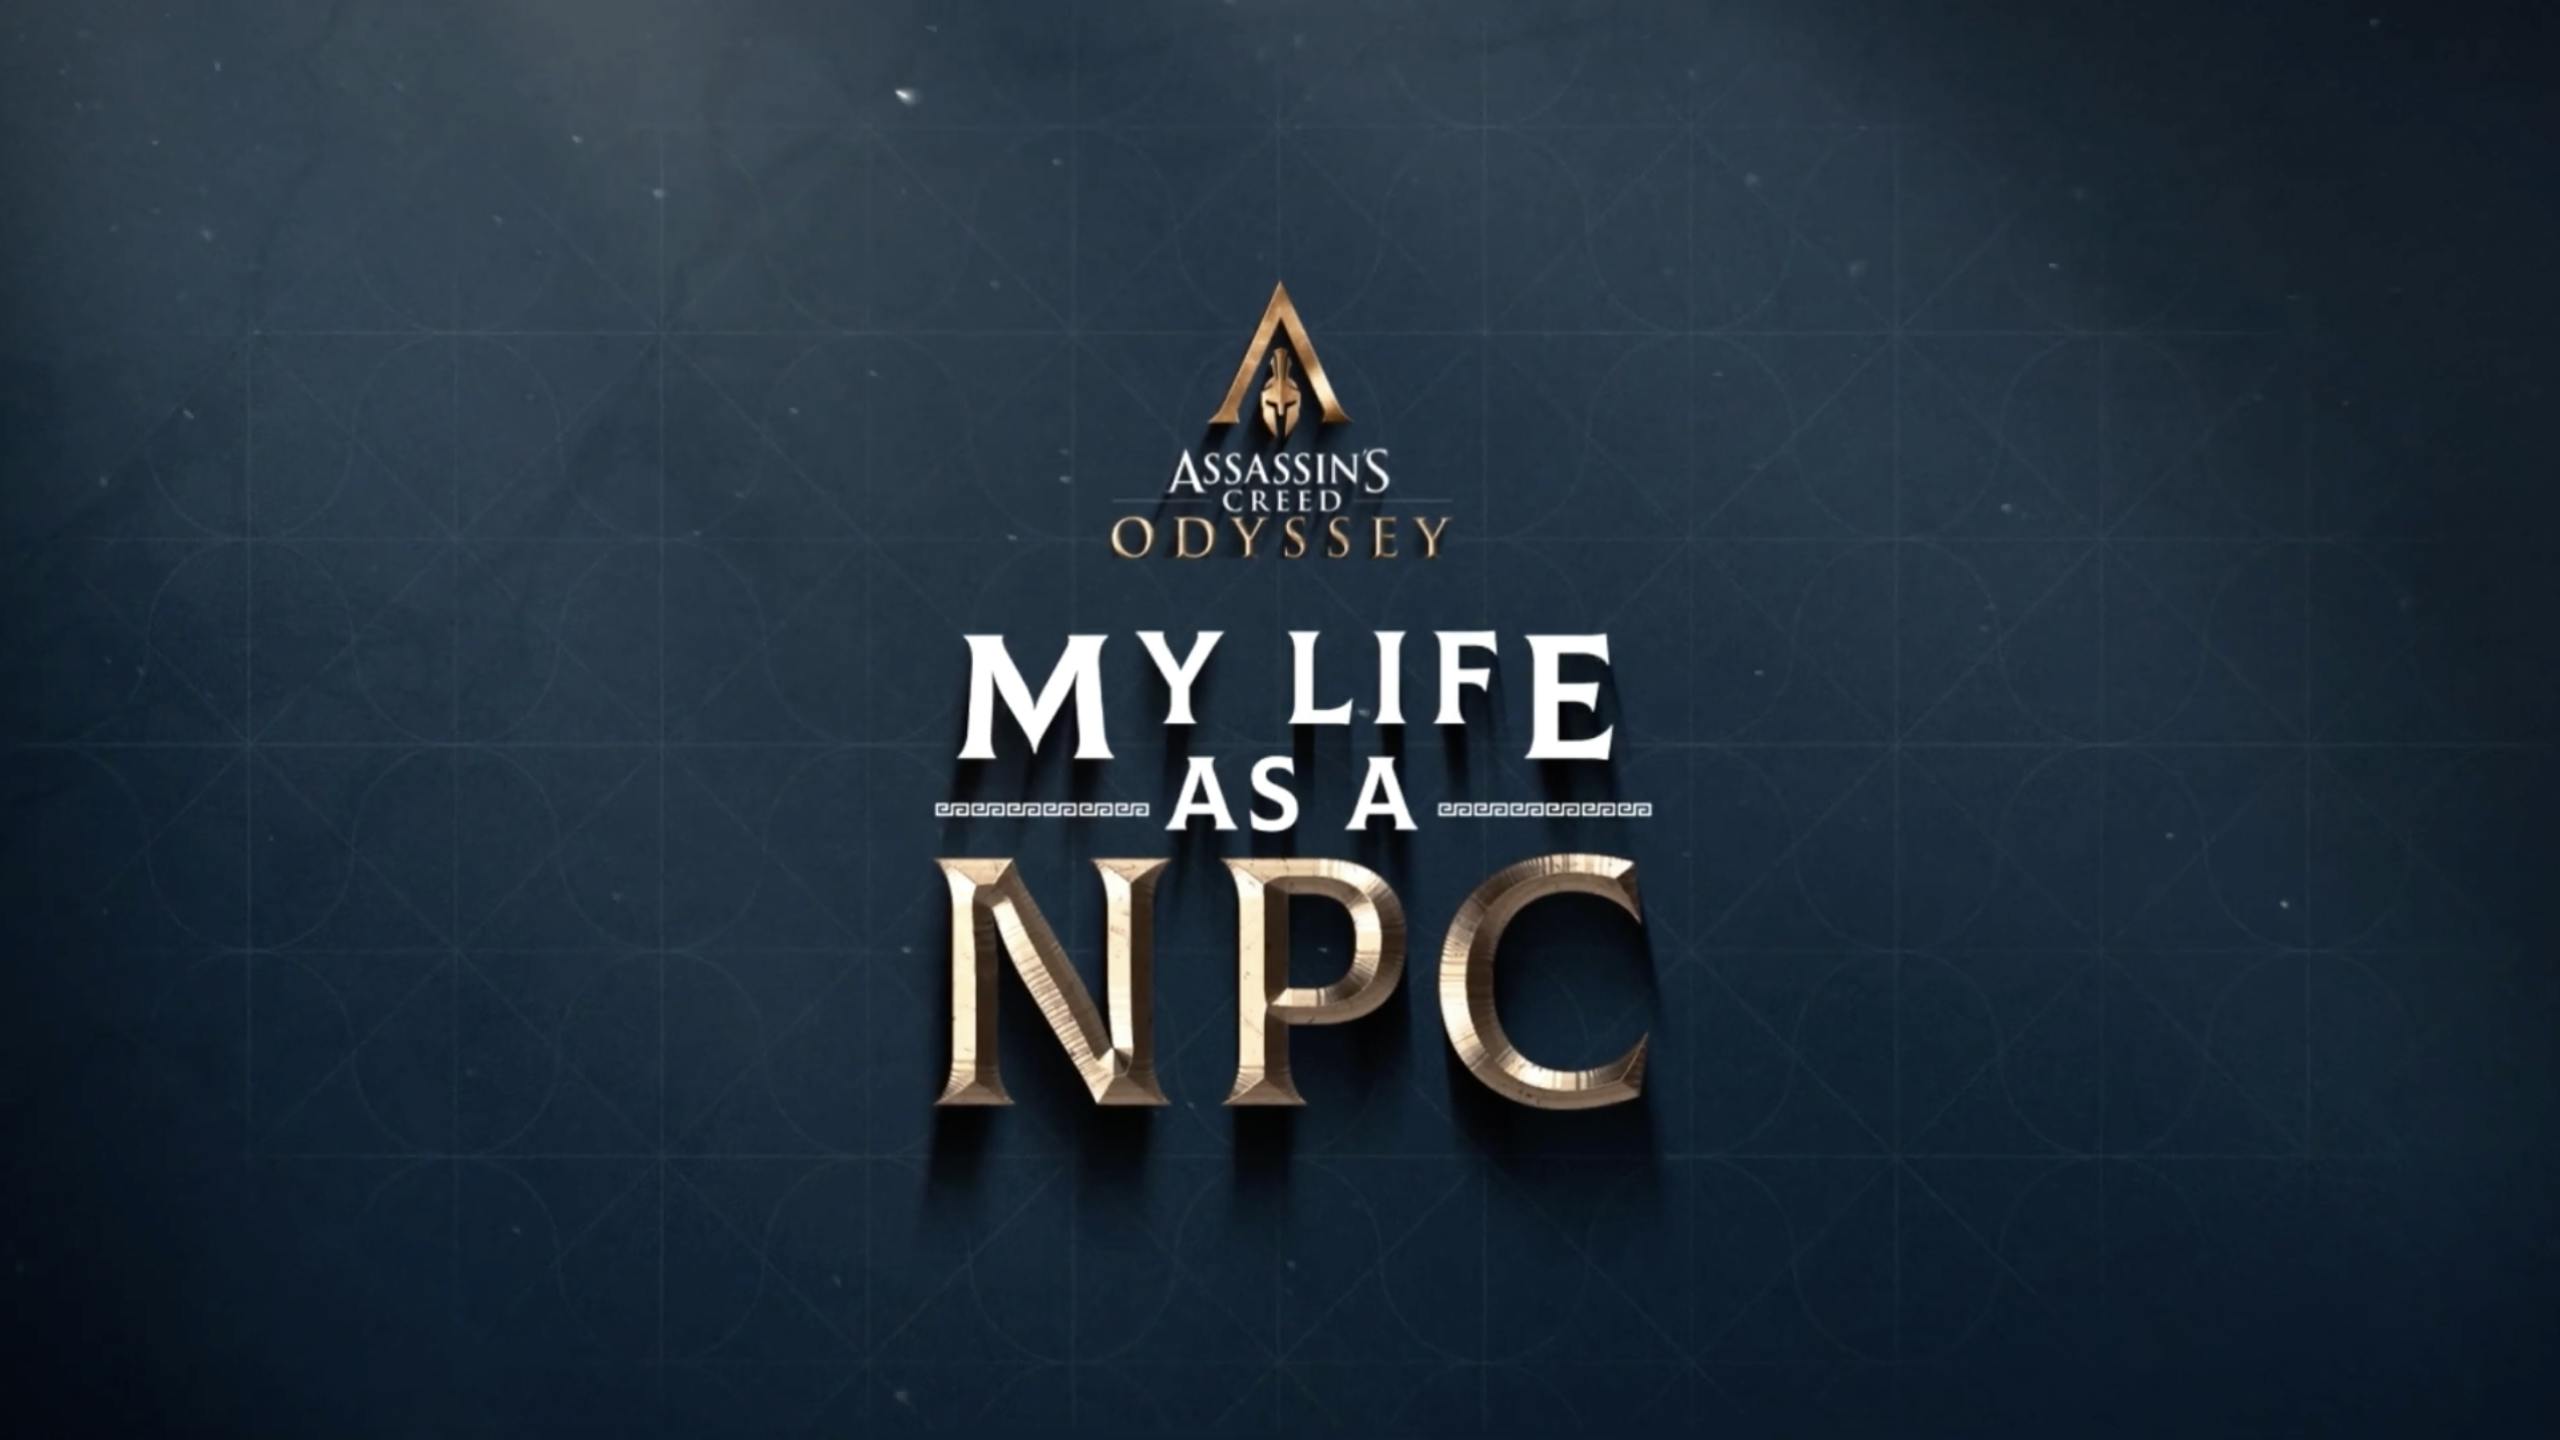 Is written : "Assassin's Creed Odyssey - My life as an NPC"